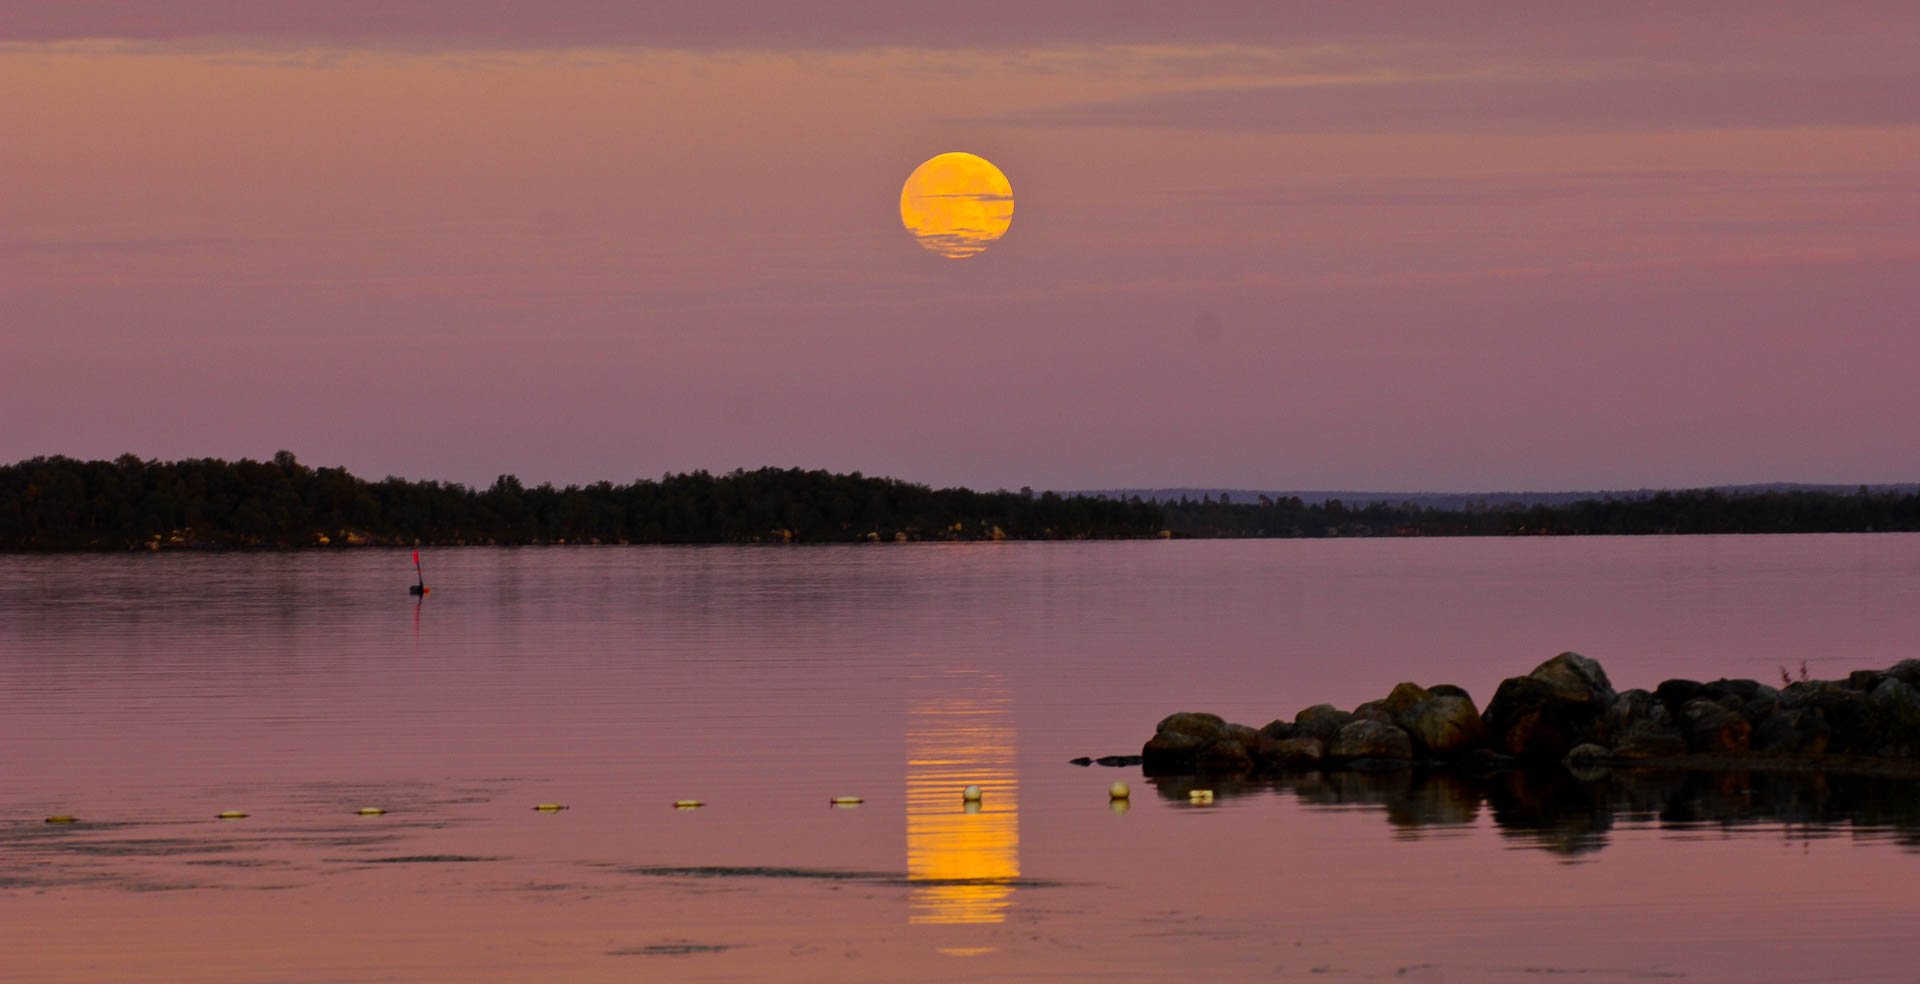 Lake Inari close to midnight